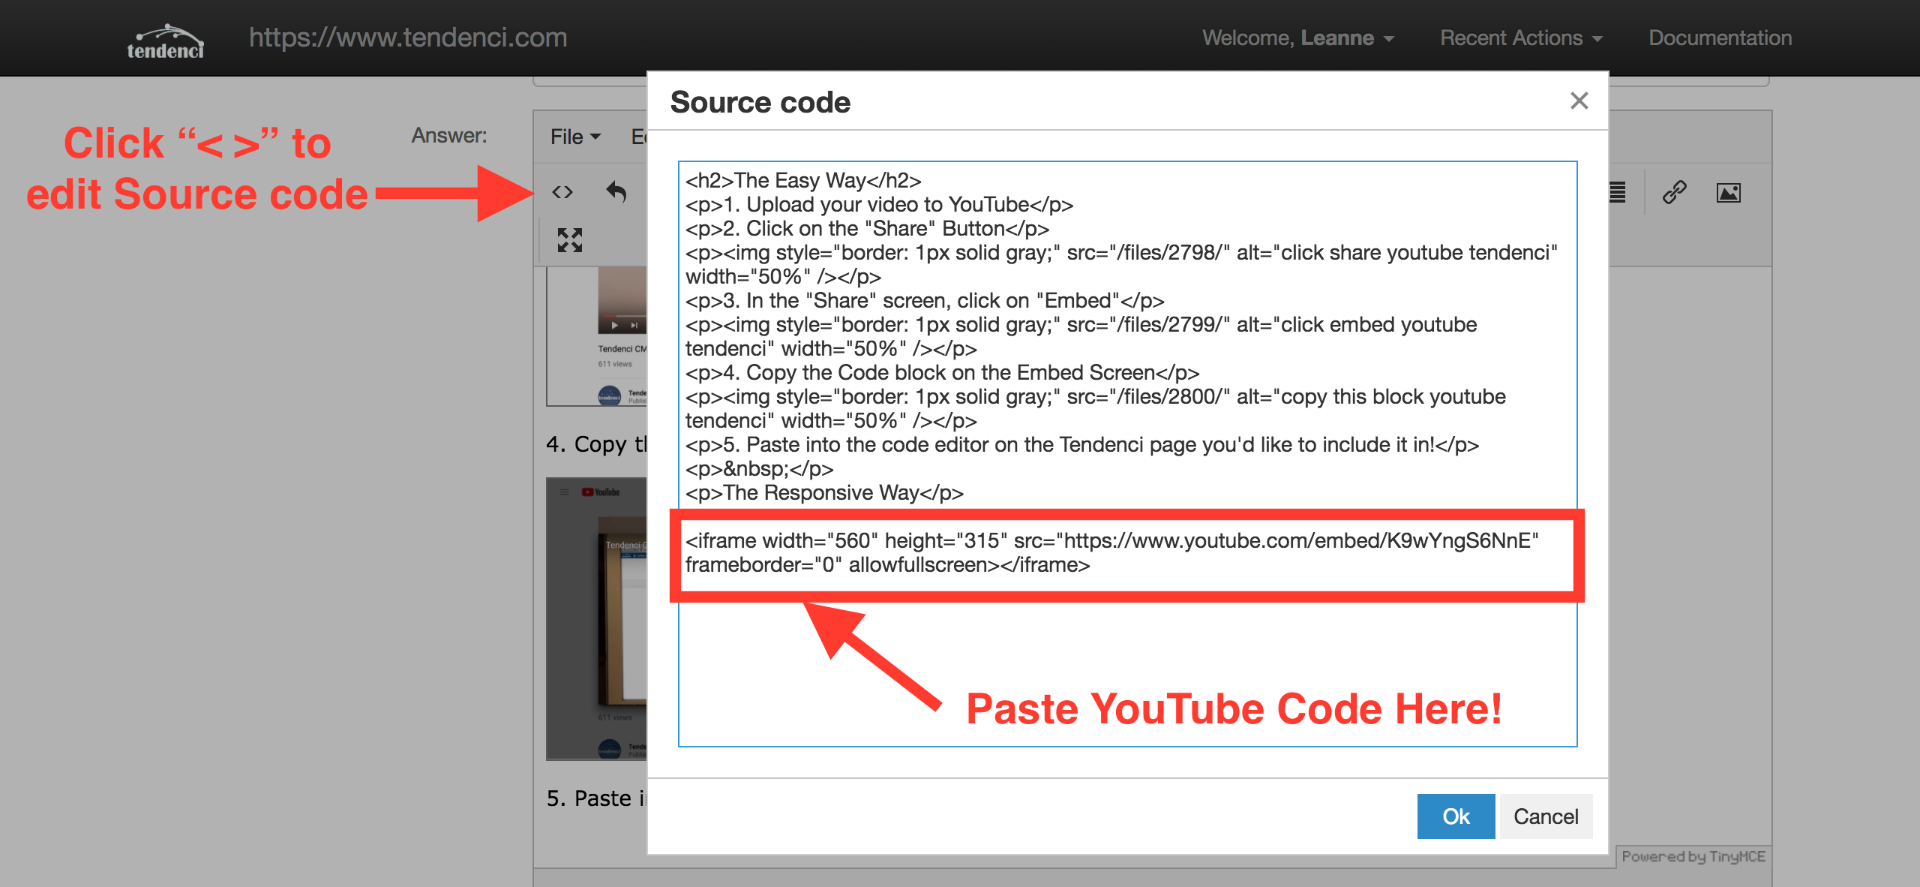 paste youtube code block here on tendenci